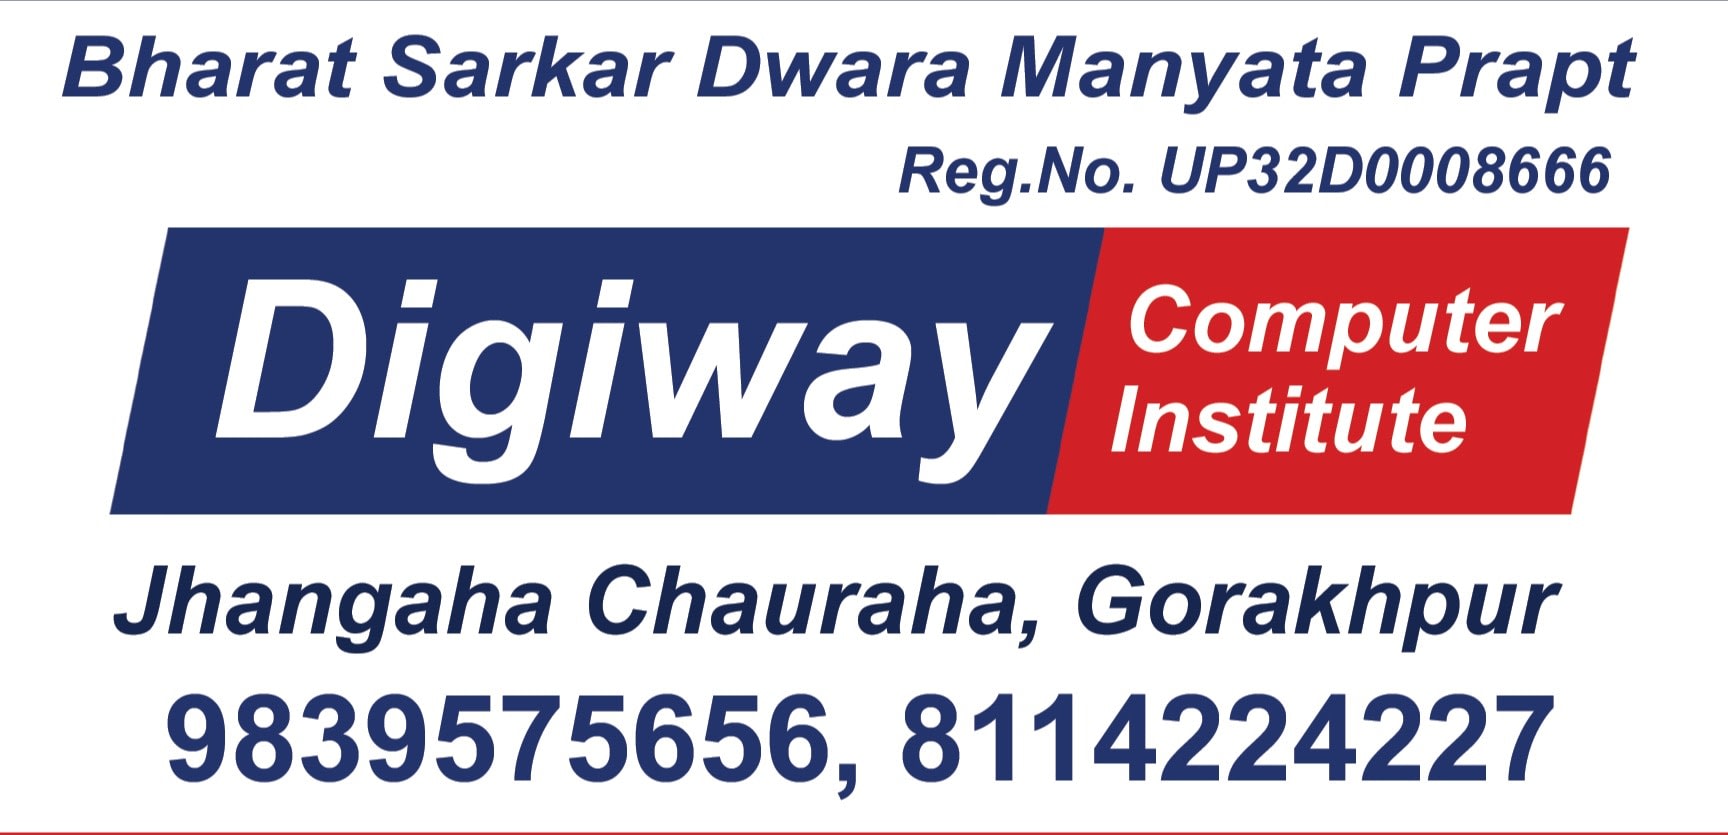 Digiway Computer Institute